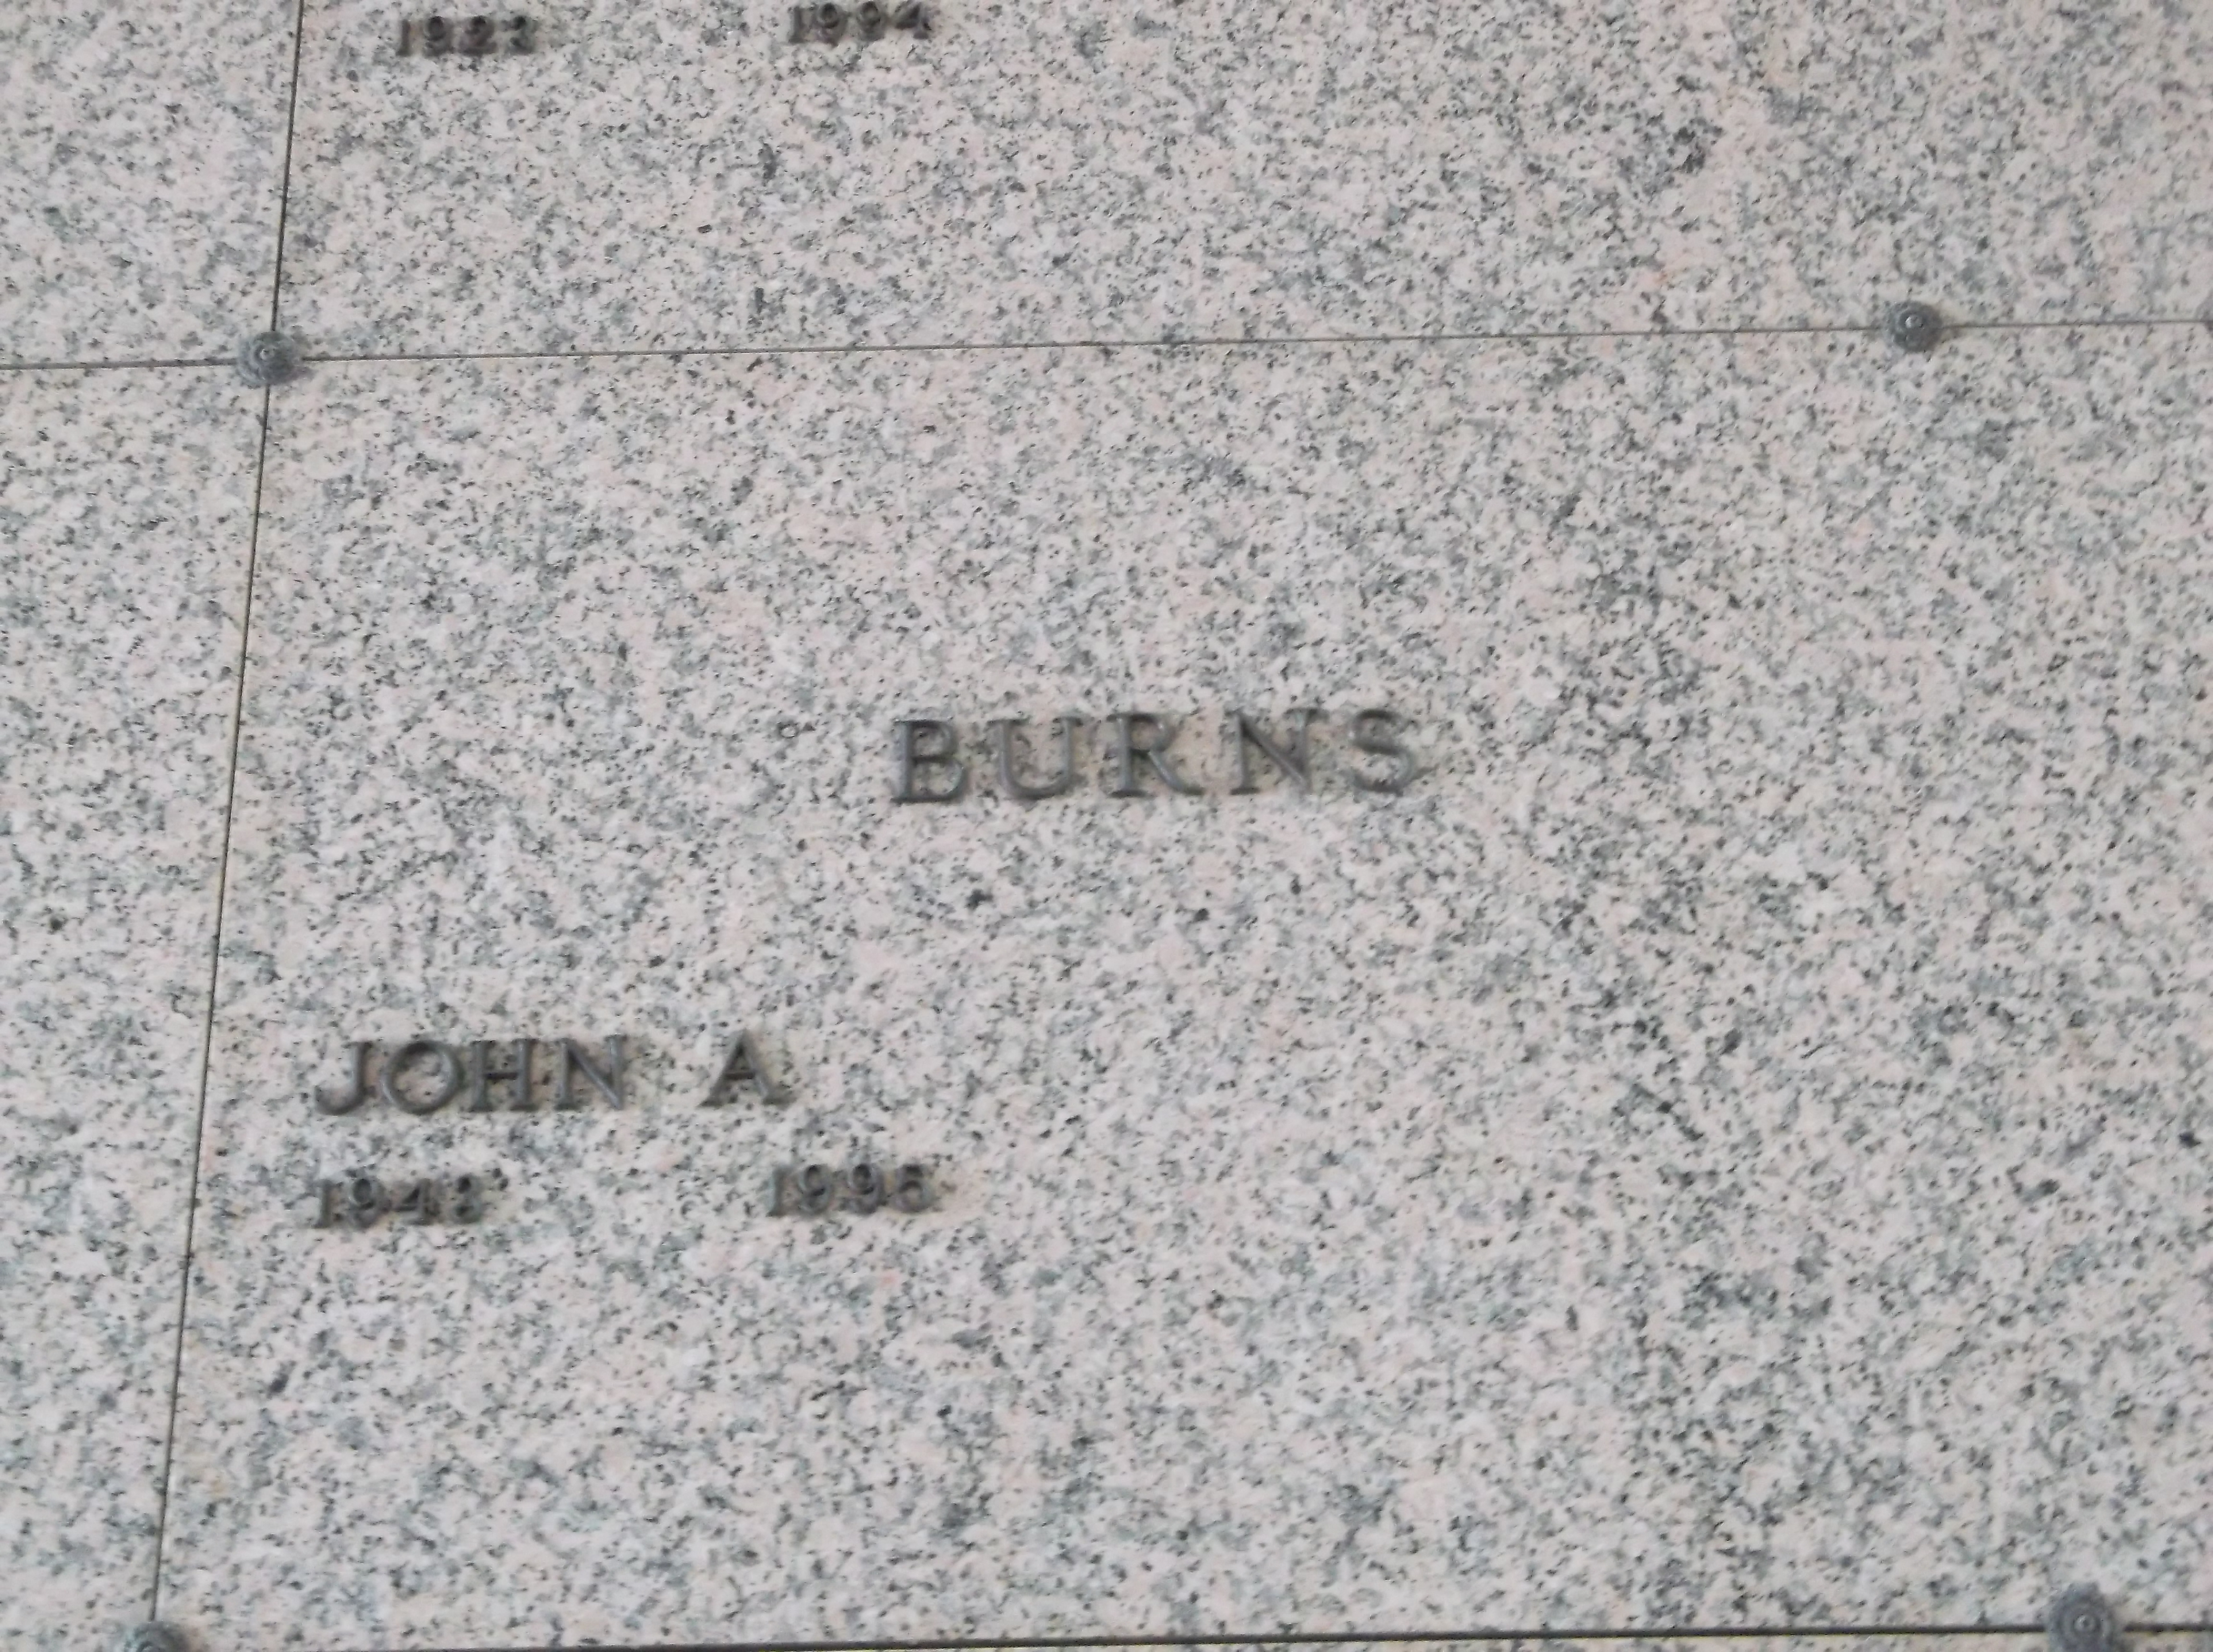 John A Burns